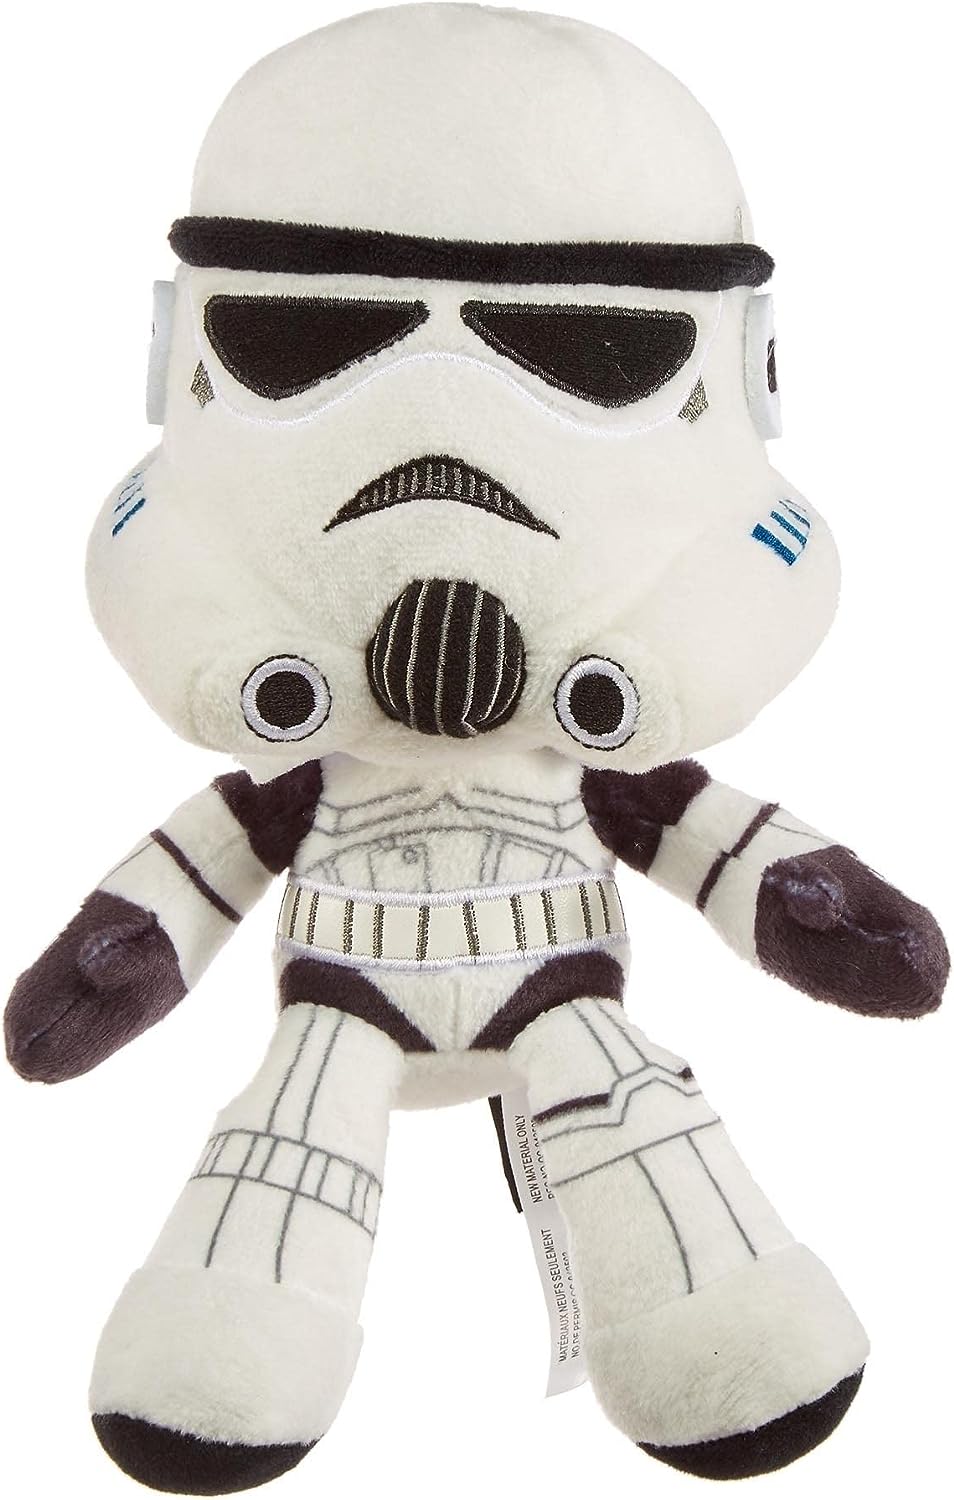 Mattel Star Wars Basic Plush 8 inch - Stormtrooper